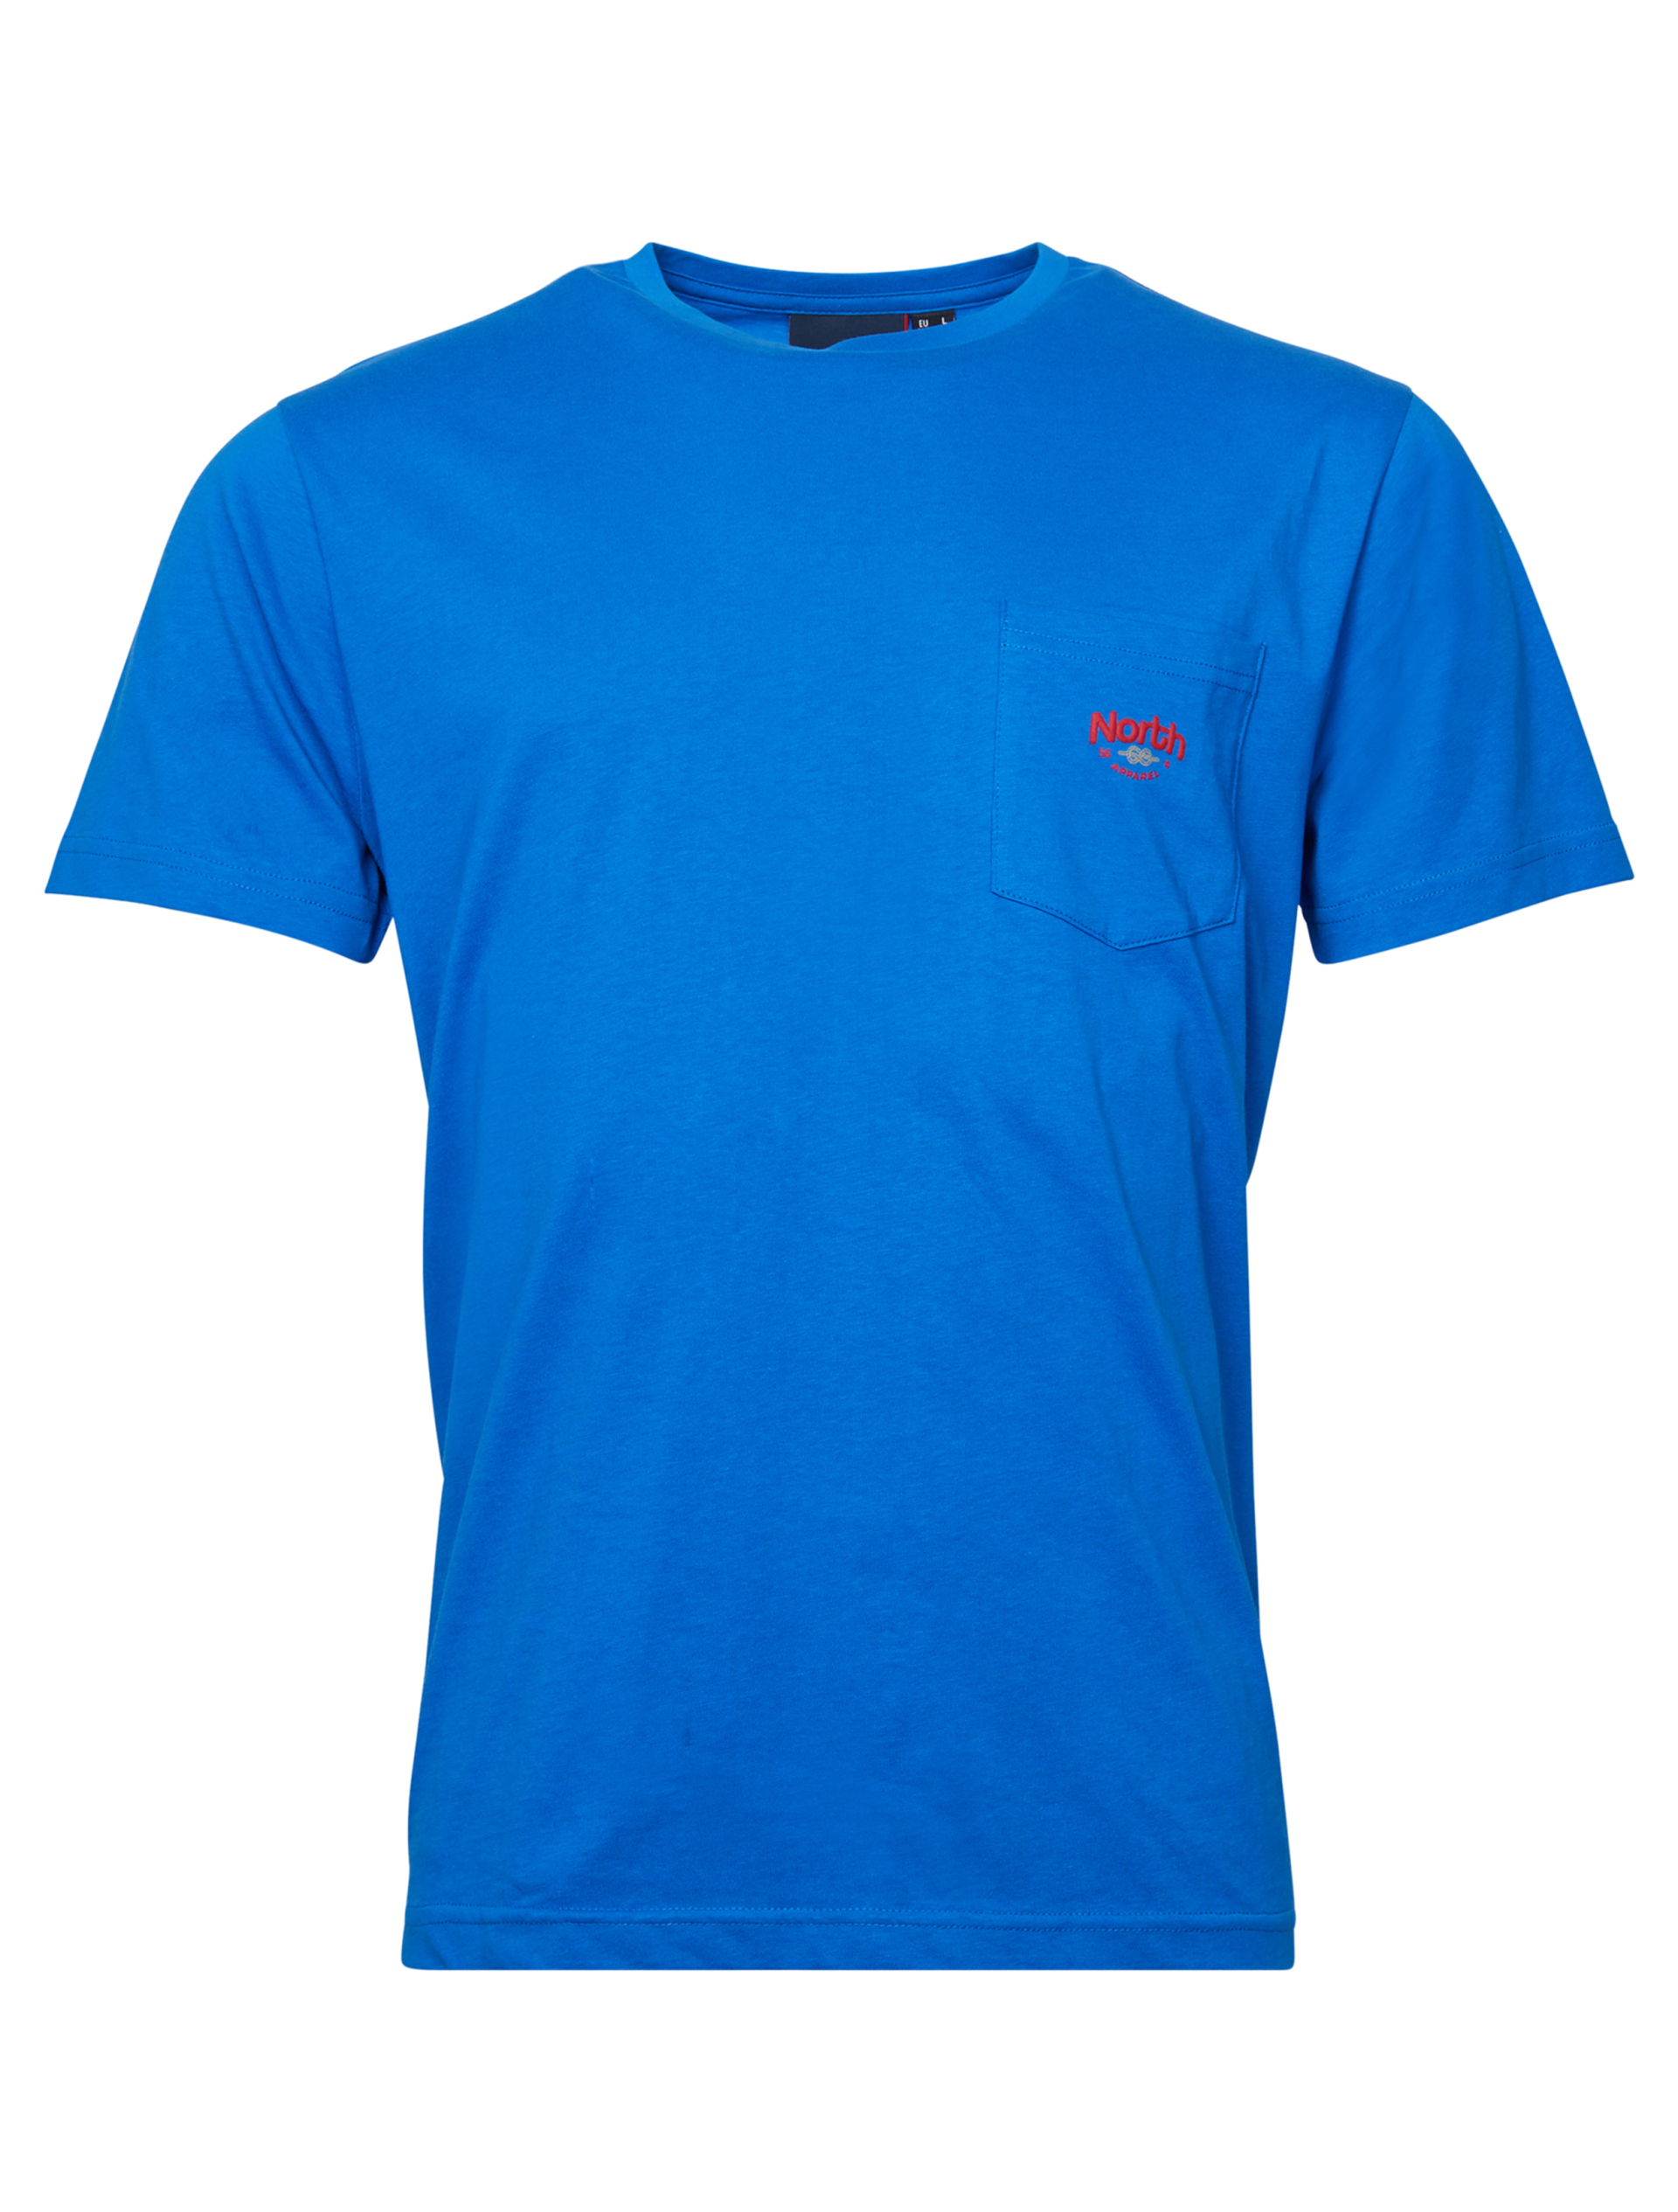 North T-shirt blå / 0585 indigo